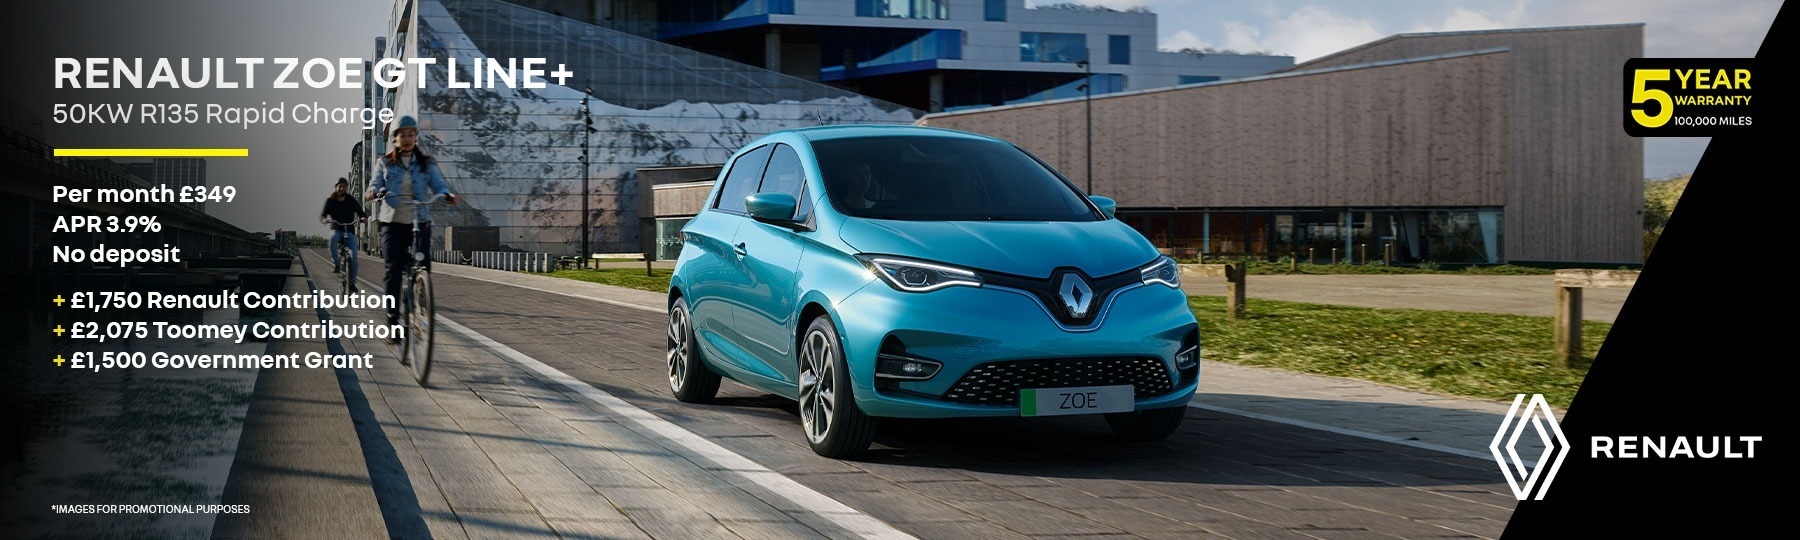 Renault ZOE New Car Offer